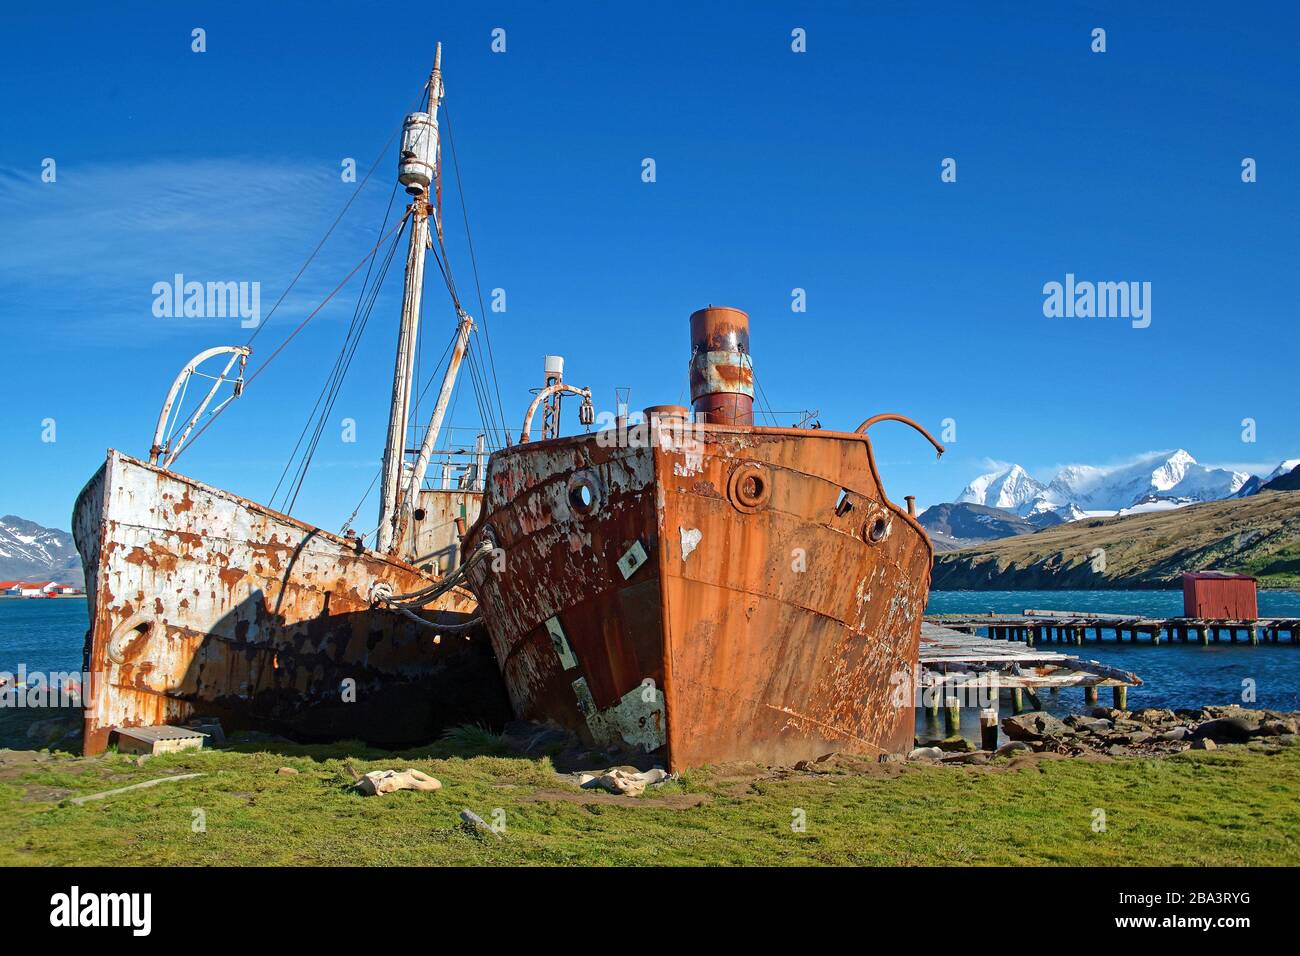 Suedamerika, Antartis, Suedgeorgien, Grytviken, Ehemalige Walfangstation Foto Stock